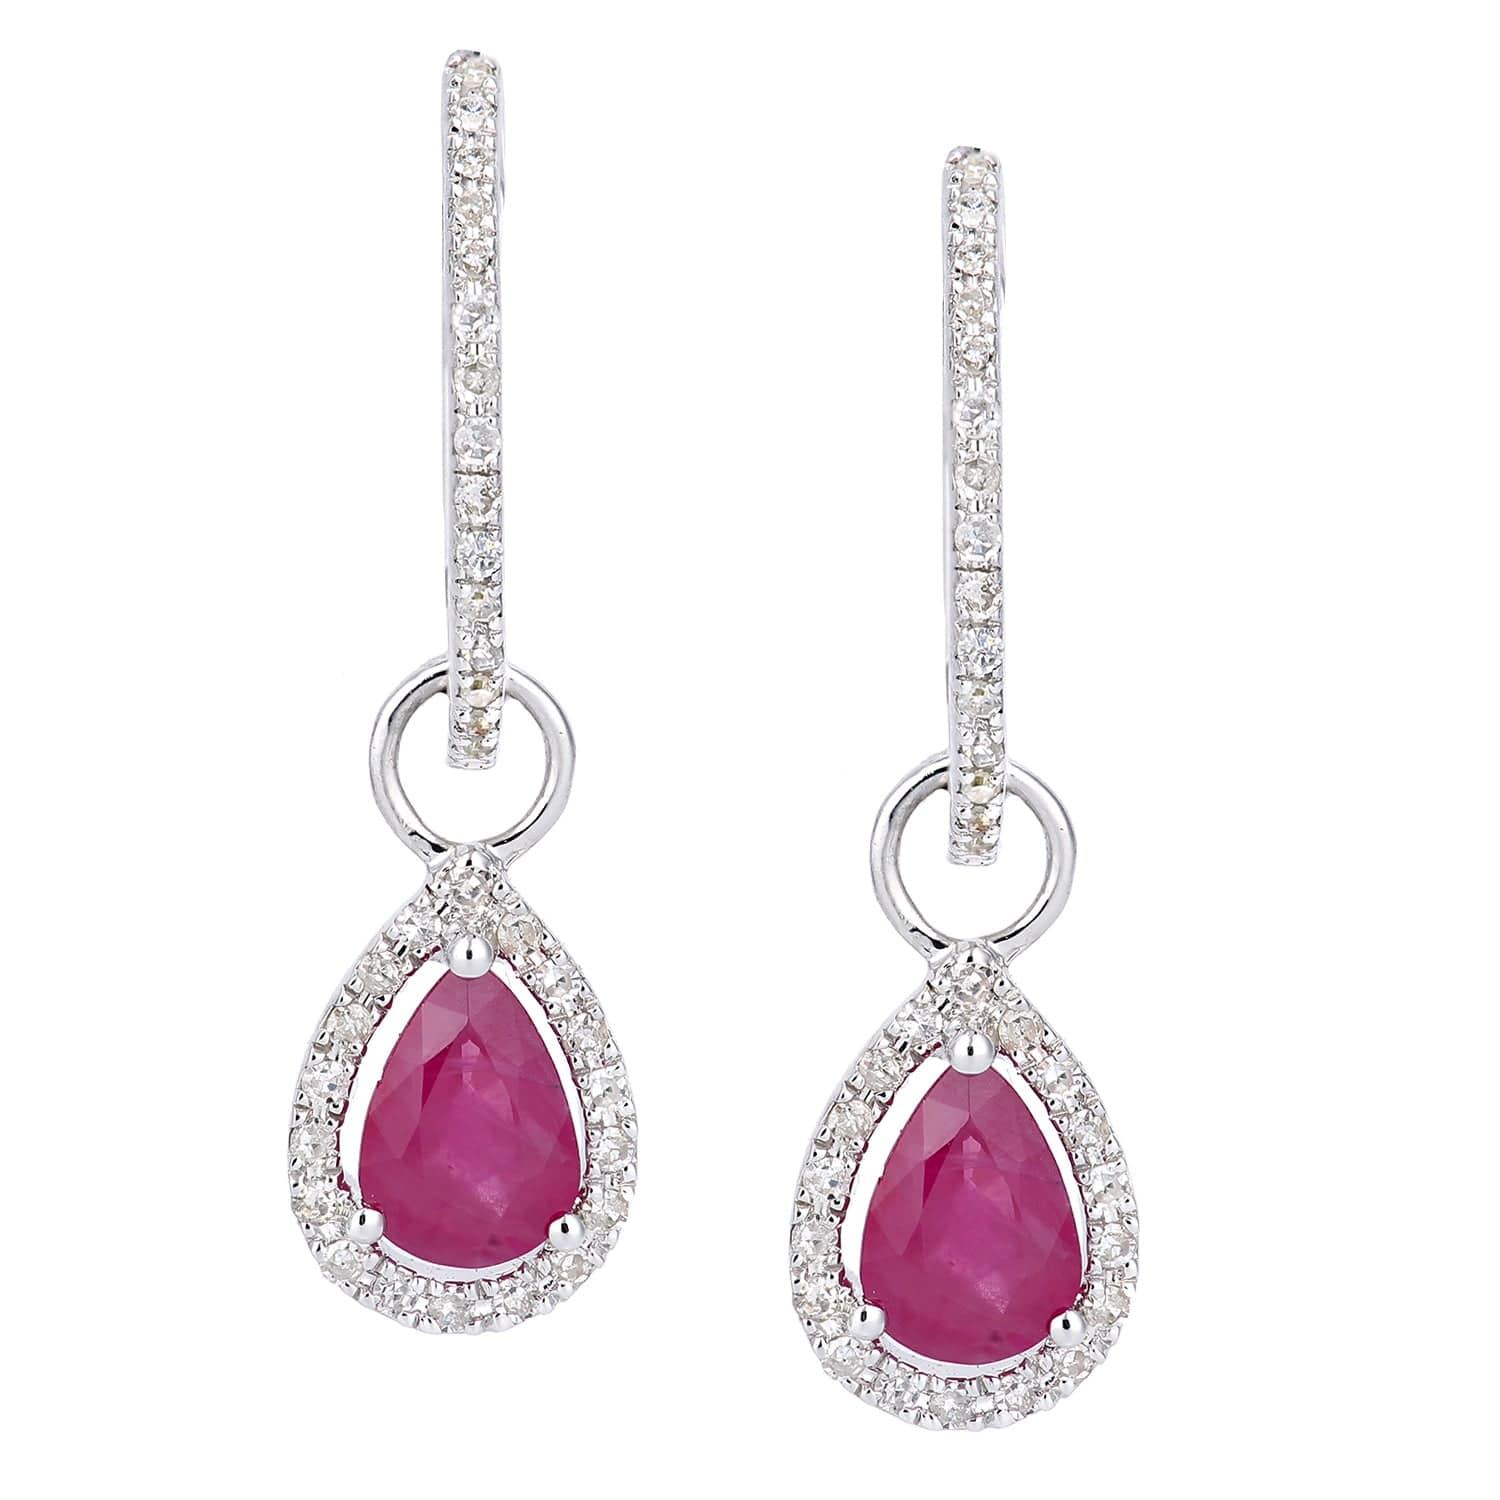 Lynora Luxe Earring White Gold 9ct / Ruby 9ct White Gold Ruby Teardrop Diamond Earrings